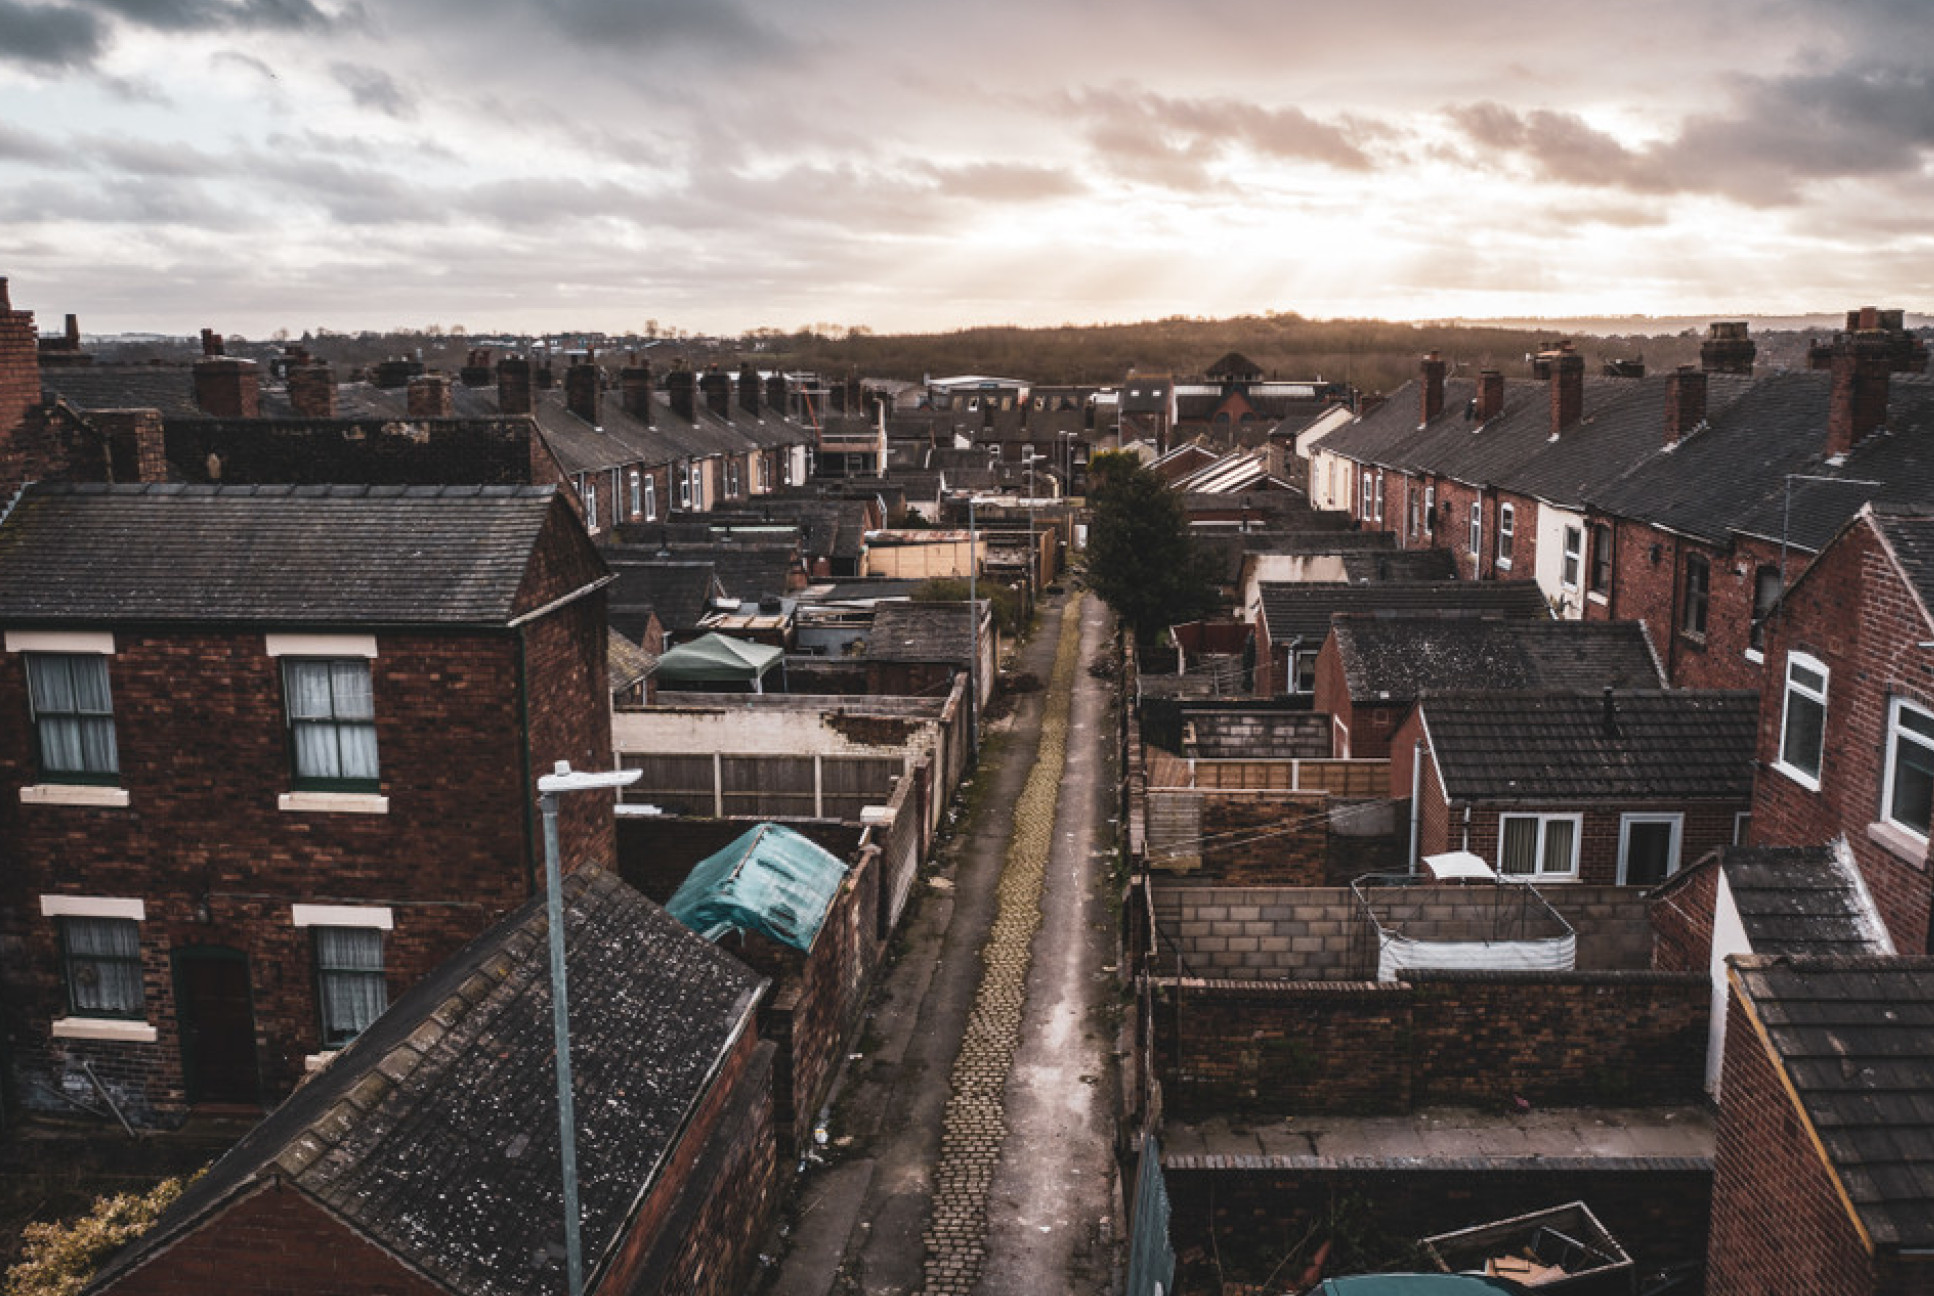 Terraced housing in the UK